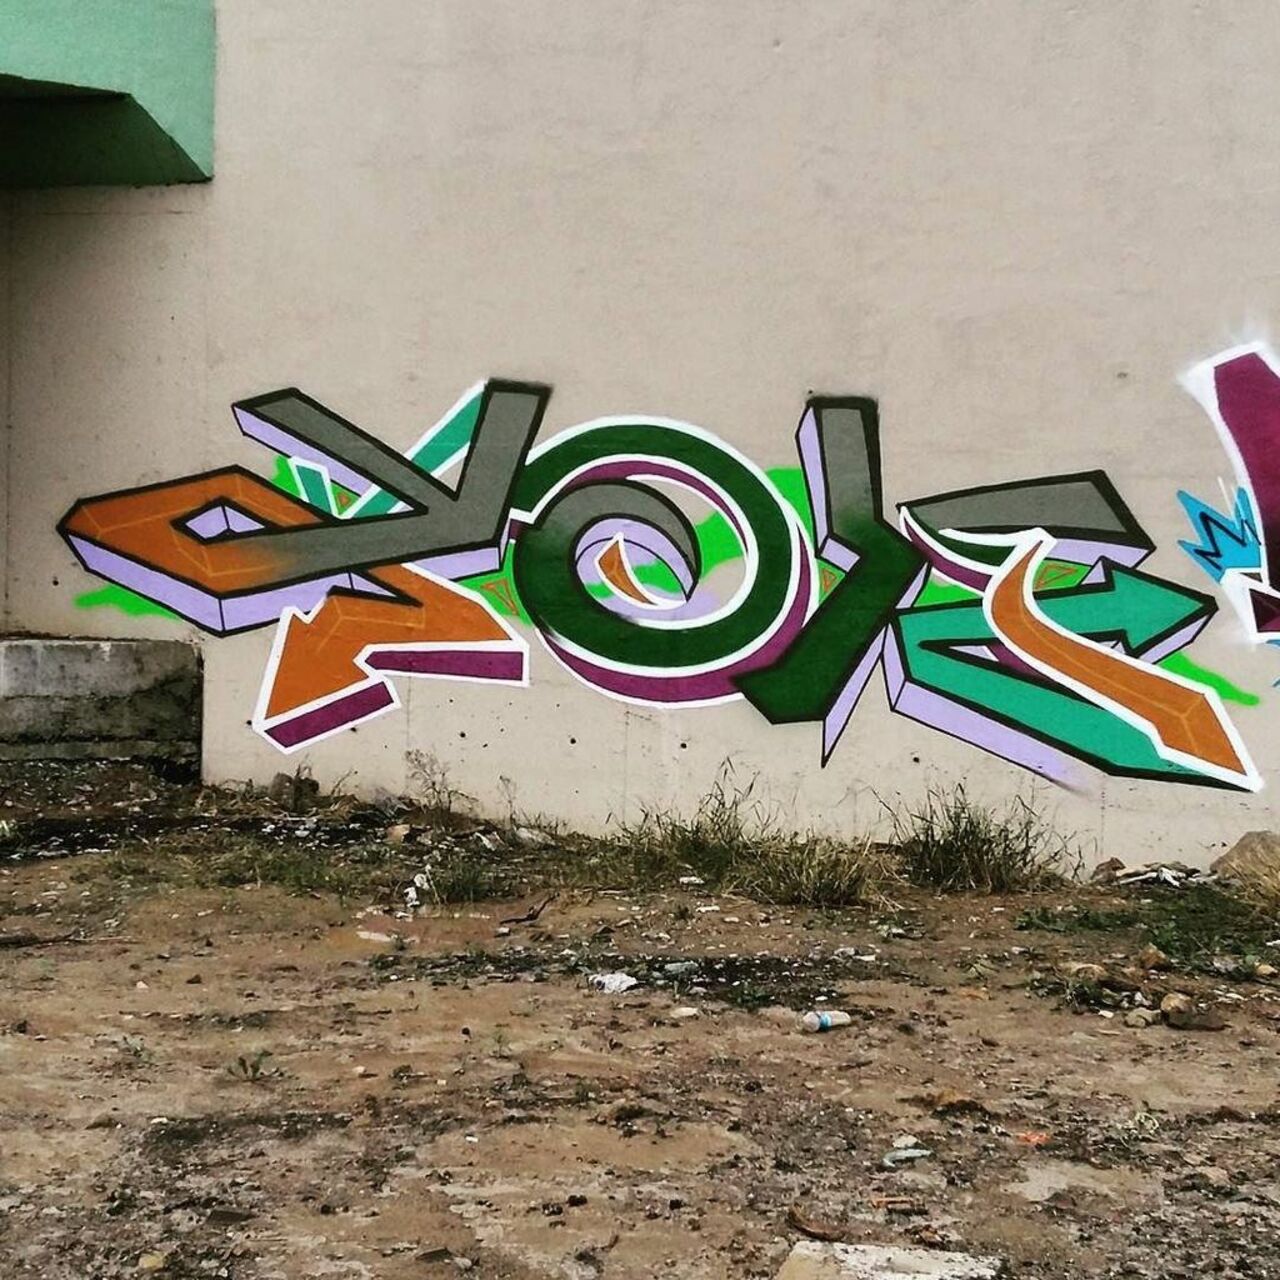 By @yyyyokk ... @dsb_graff #dsb_graff @rsa_graffiti@streetawesome #streetart #urbanart #graffitiart #graffiti #stre… https://t.co/piBliZfuGX